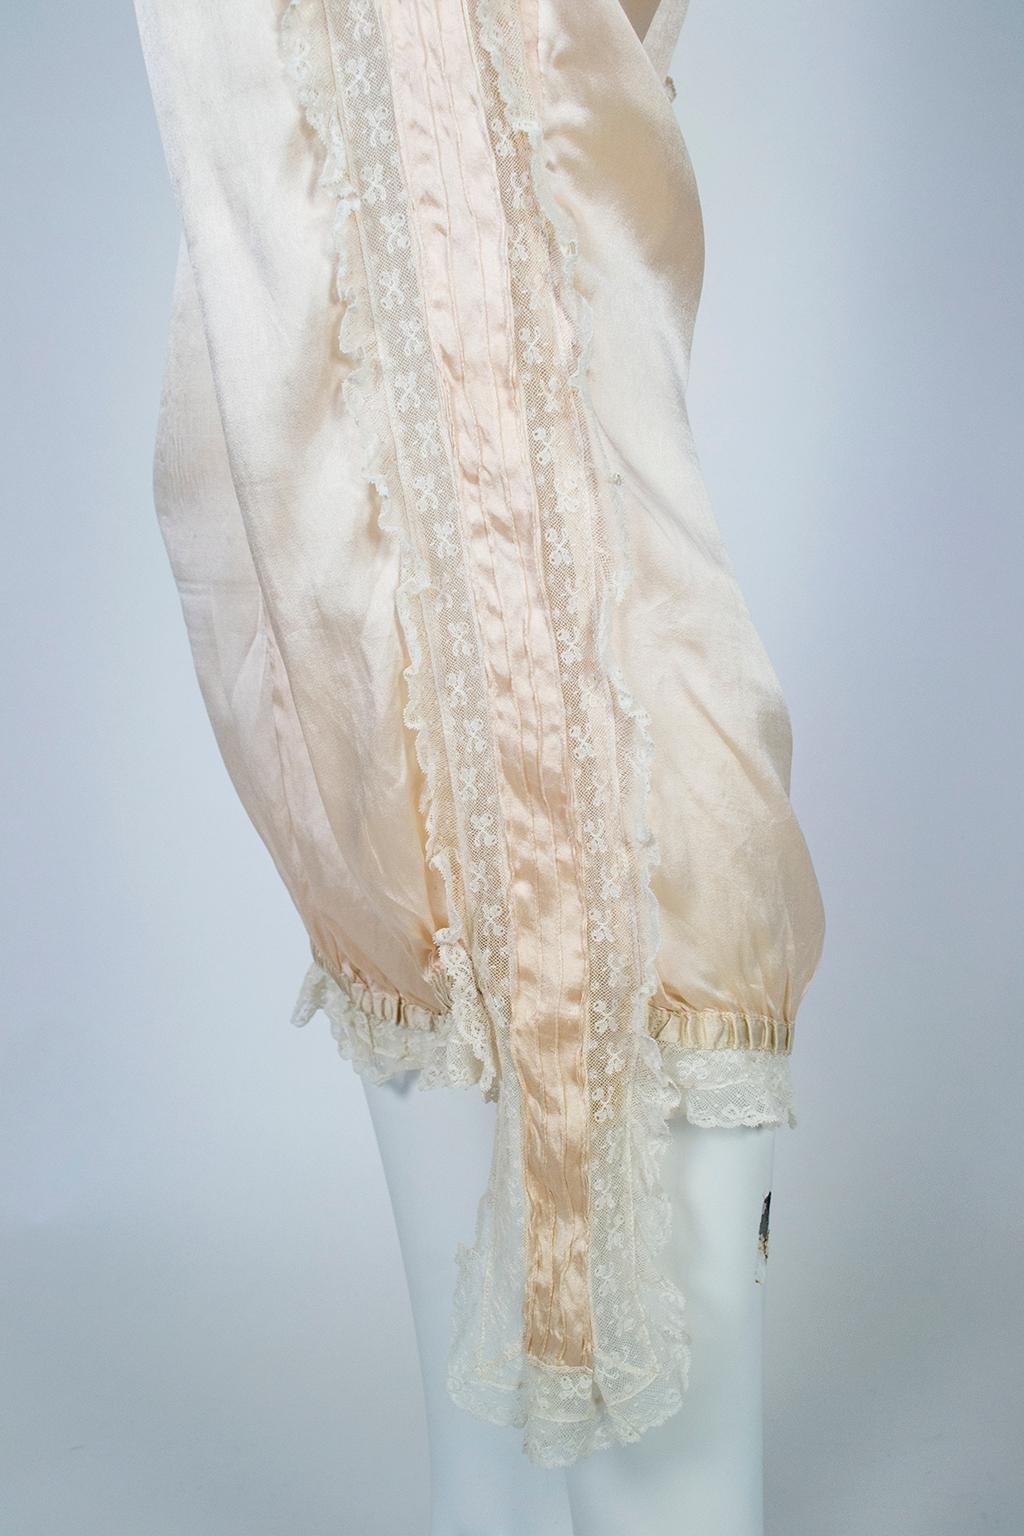 Edwardian Blush Silk Charmeuse and Lace ¾ Bloomer Pantalettes - Medium, 1900s 3